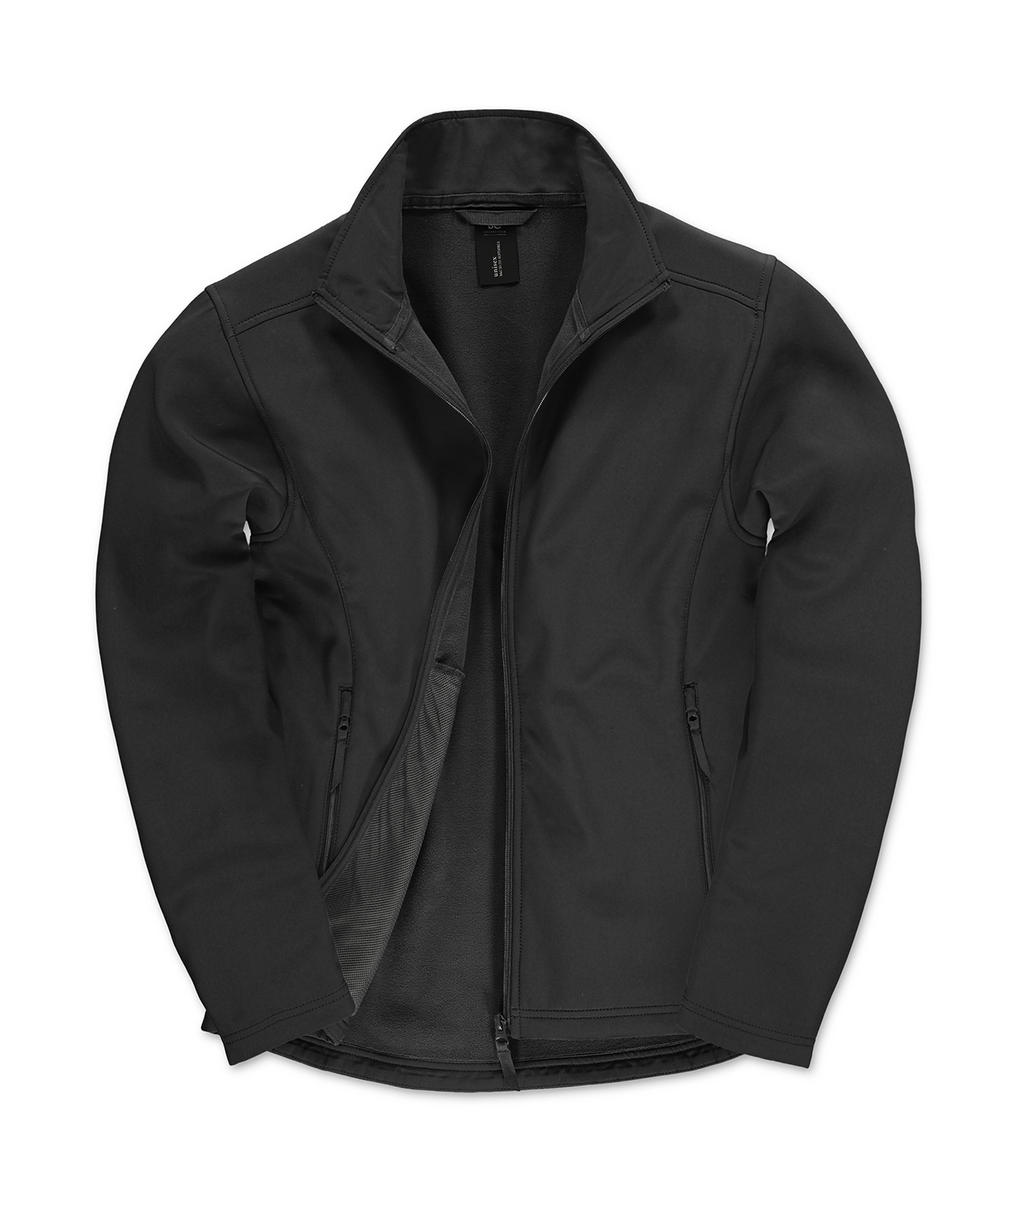  ID.701 Softshell Jacket in Farbe Black/Black